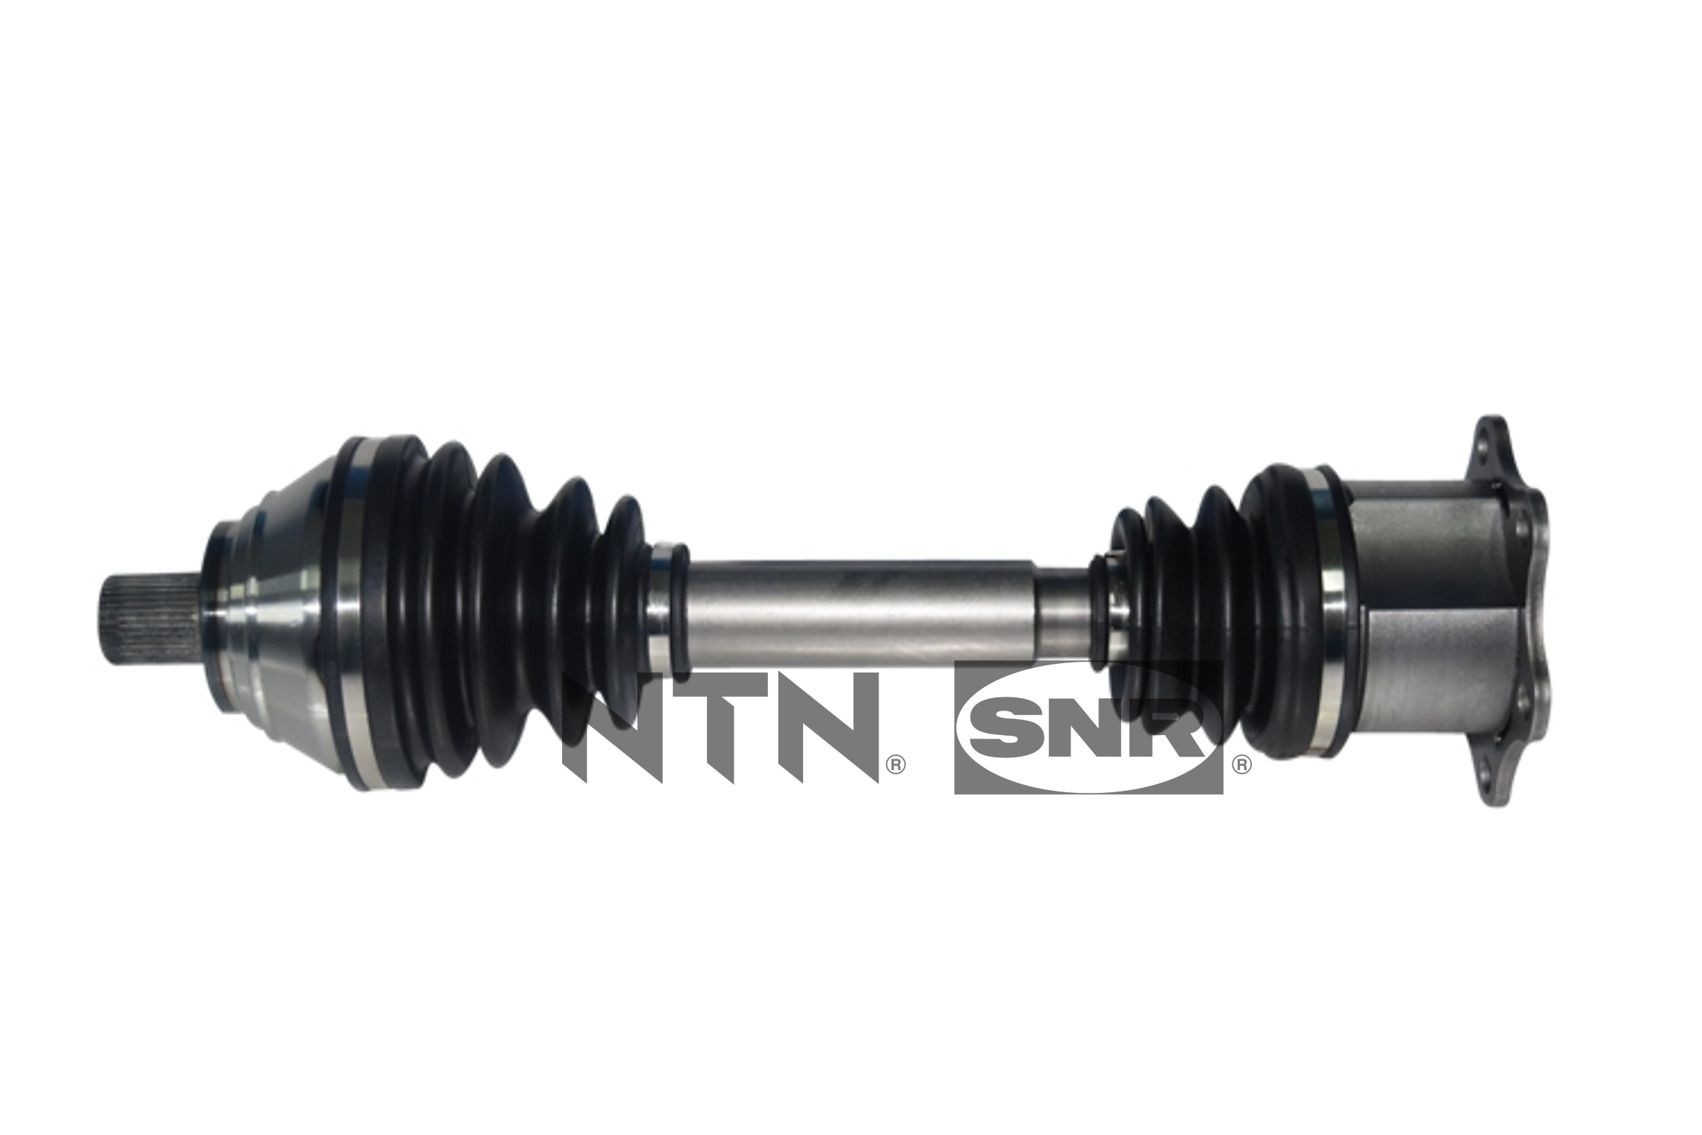 Audi TT Drive shaft SNR DK54.021 cheap